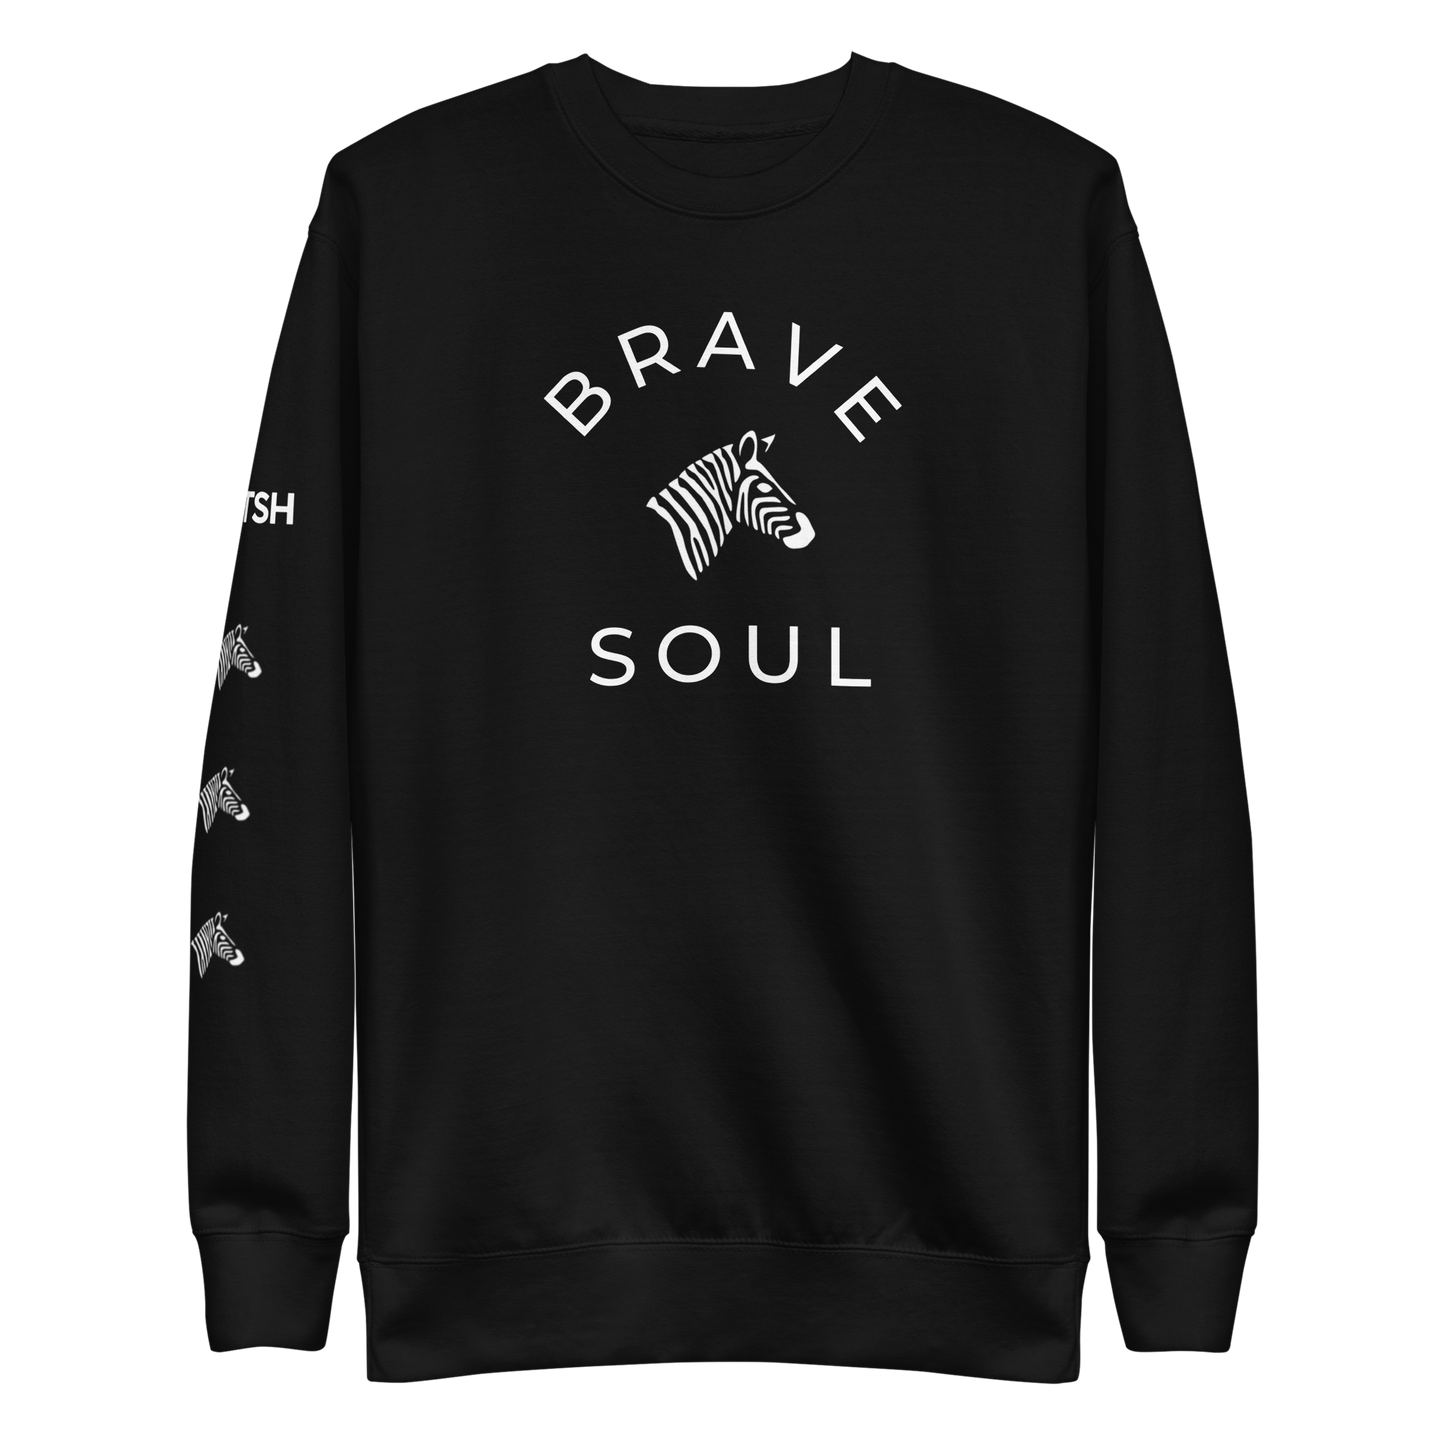 Women's Premium "Brave Soul" Black Sweatshirt